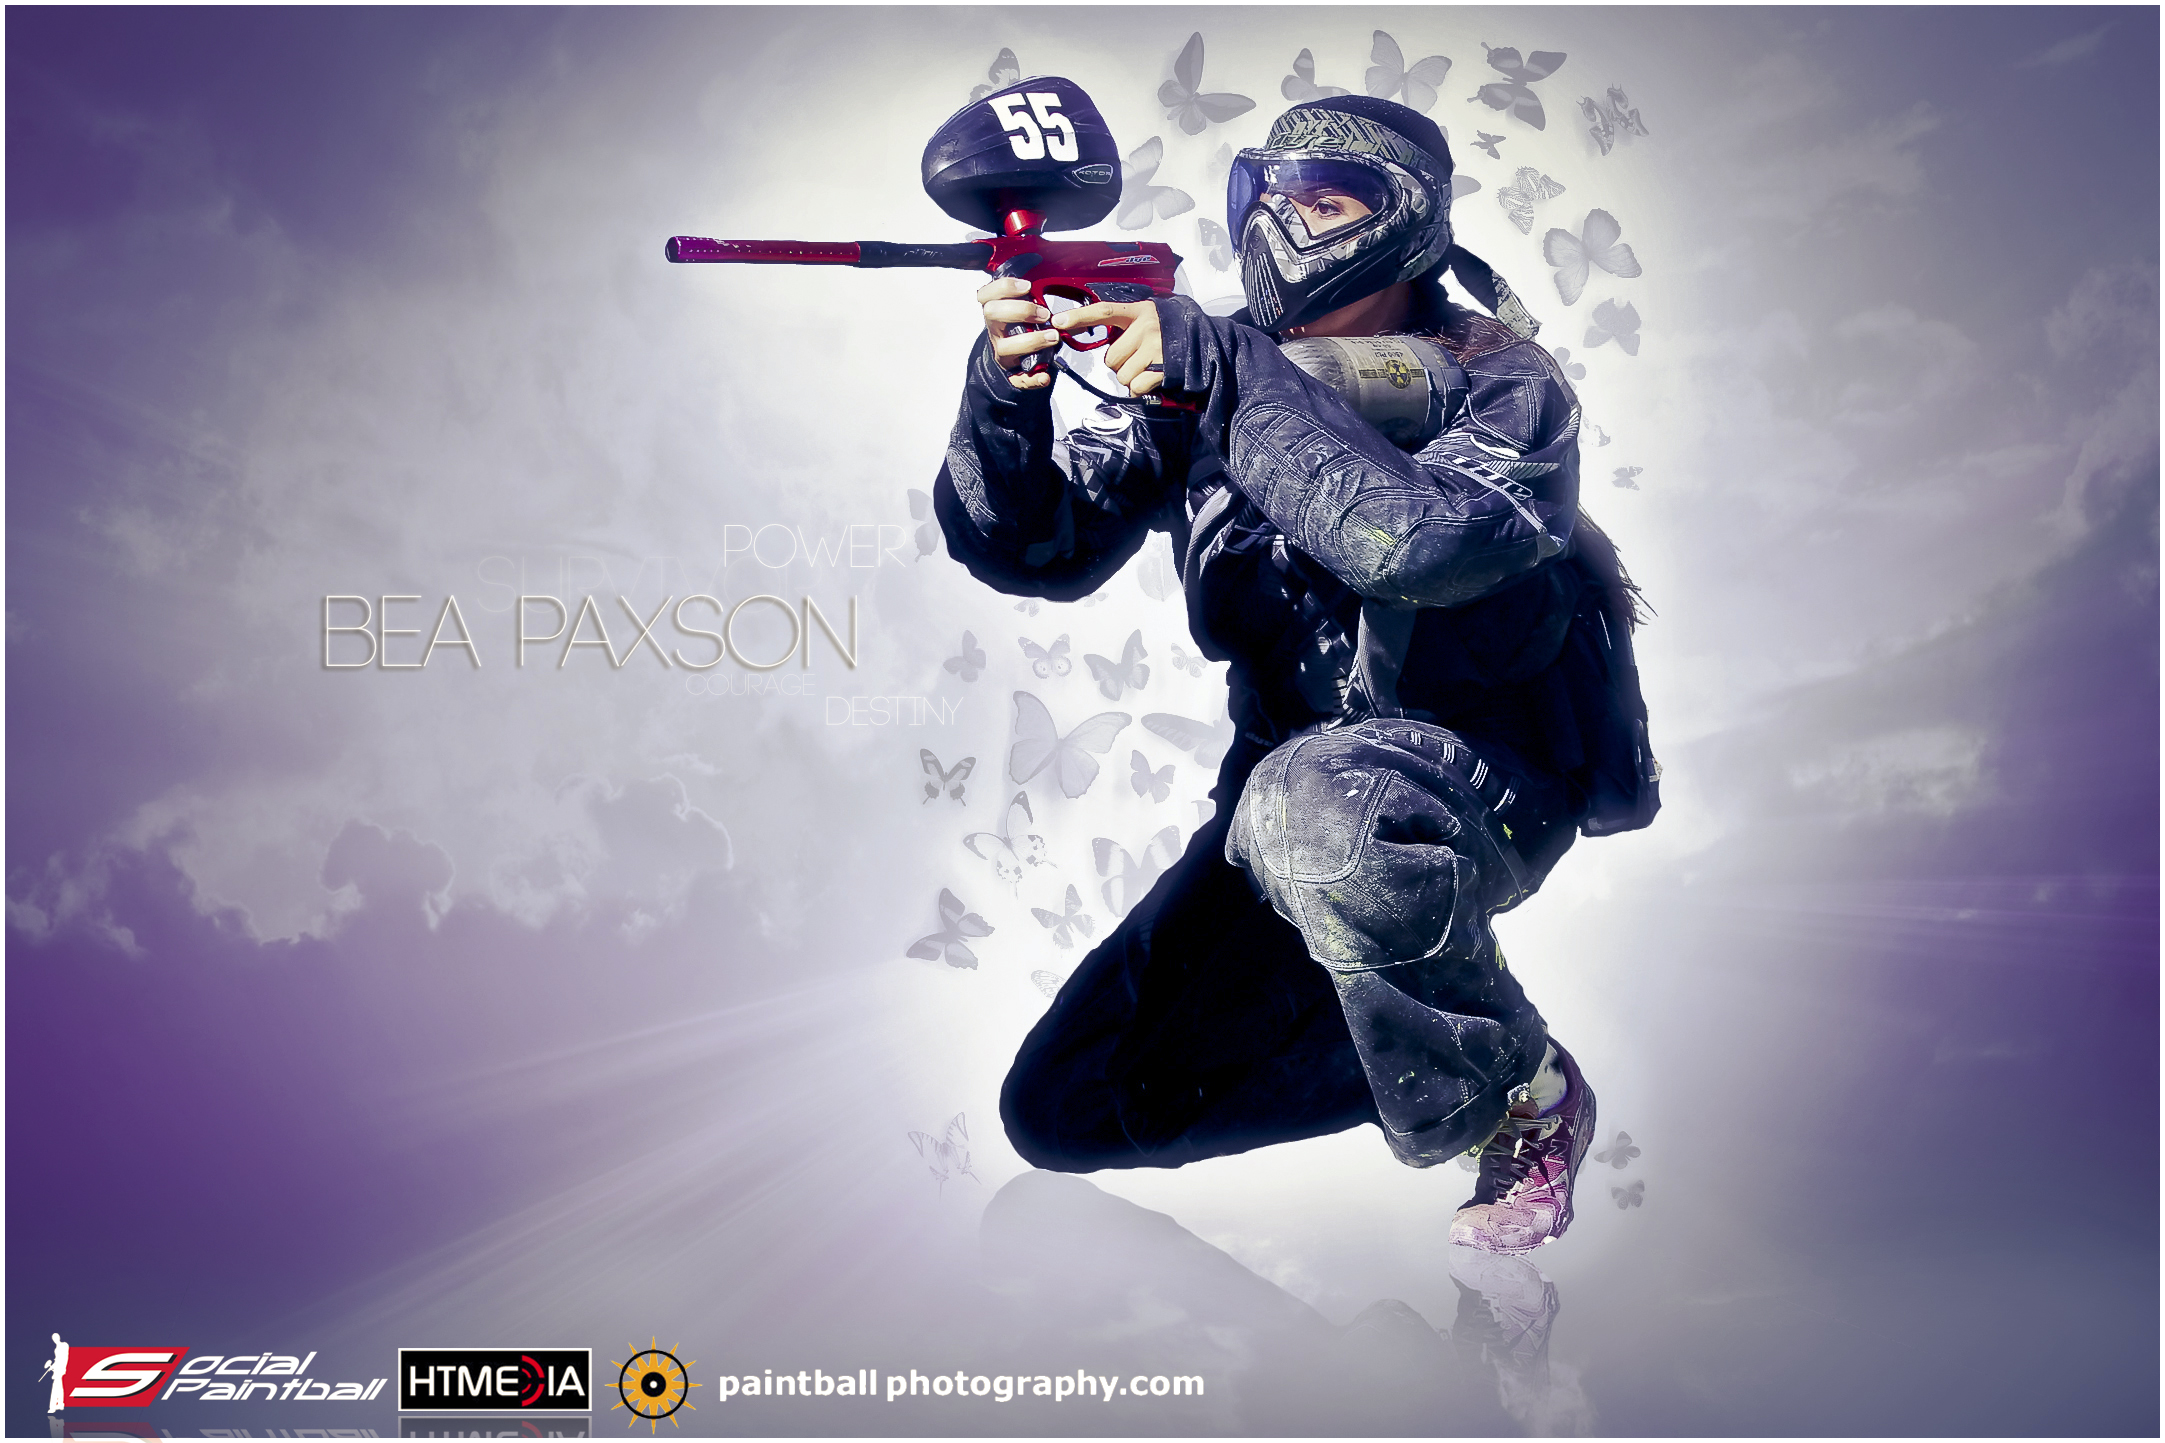 Paintball Legends Series – Bea Paxson